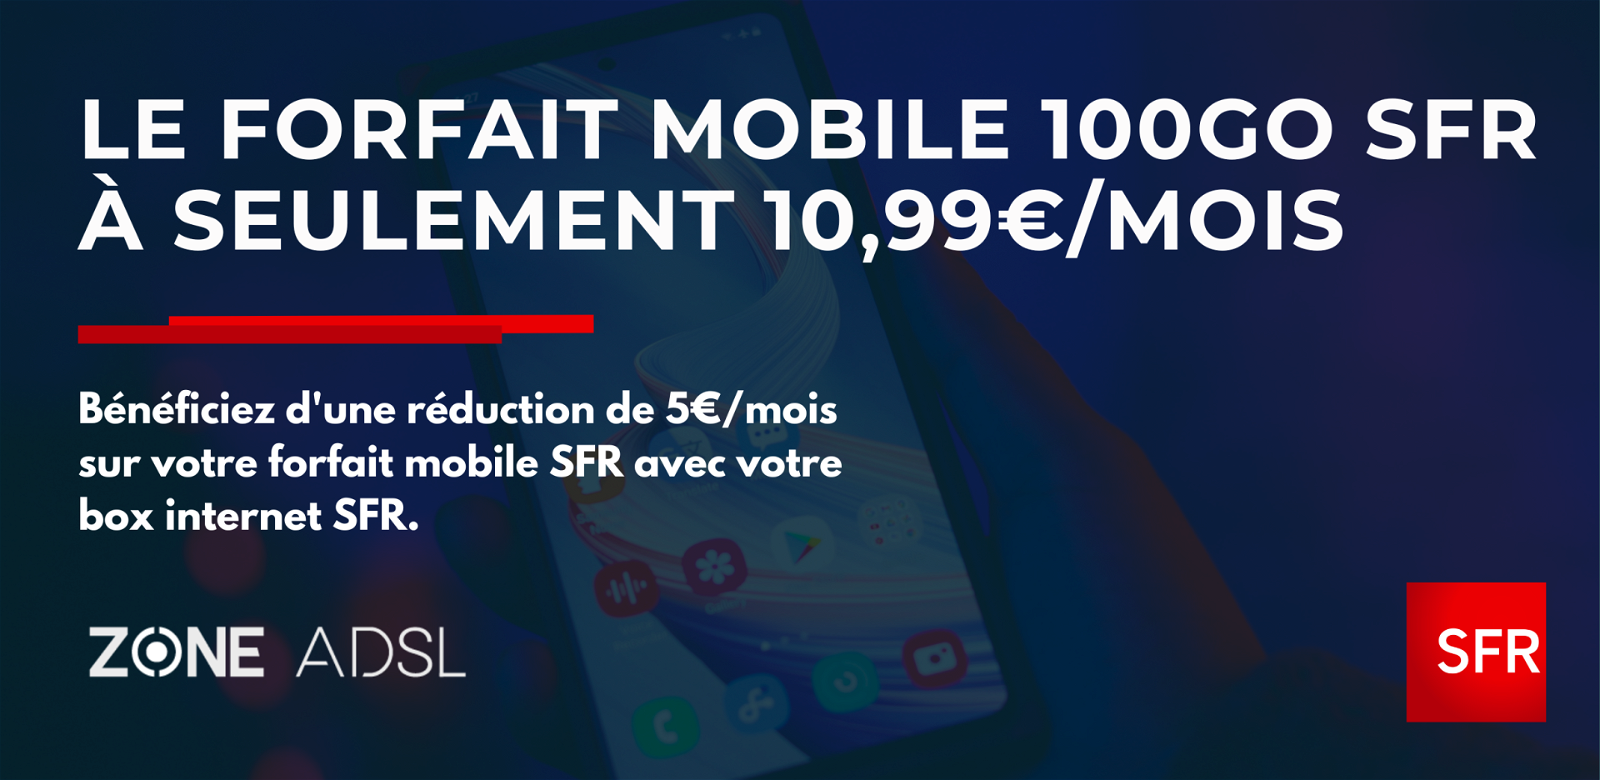 Forfait mobile 100Go SFR